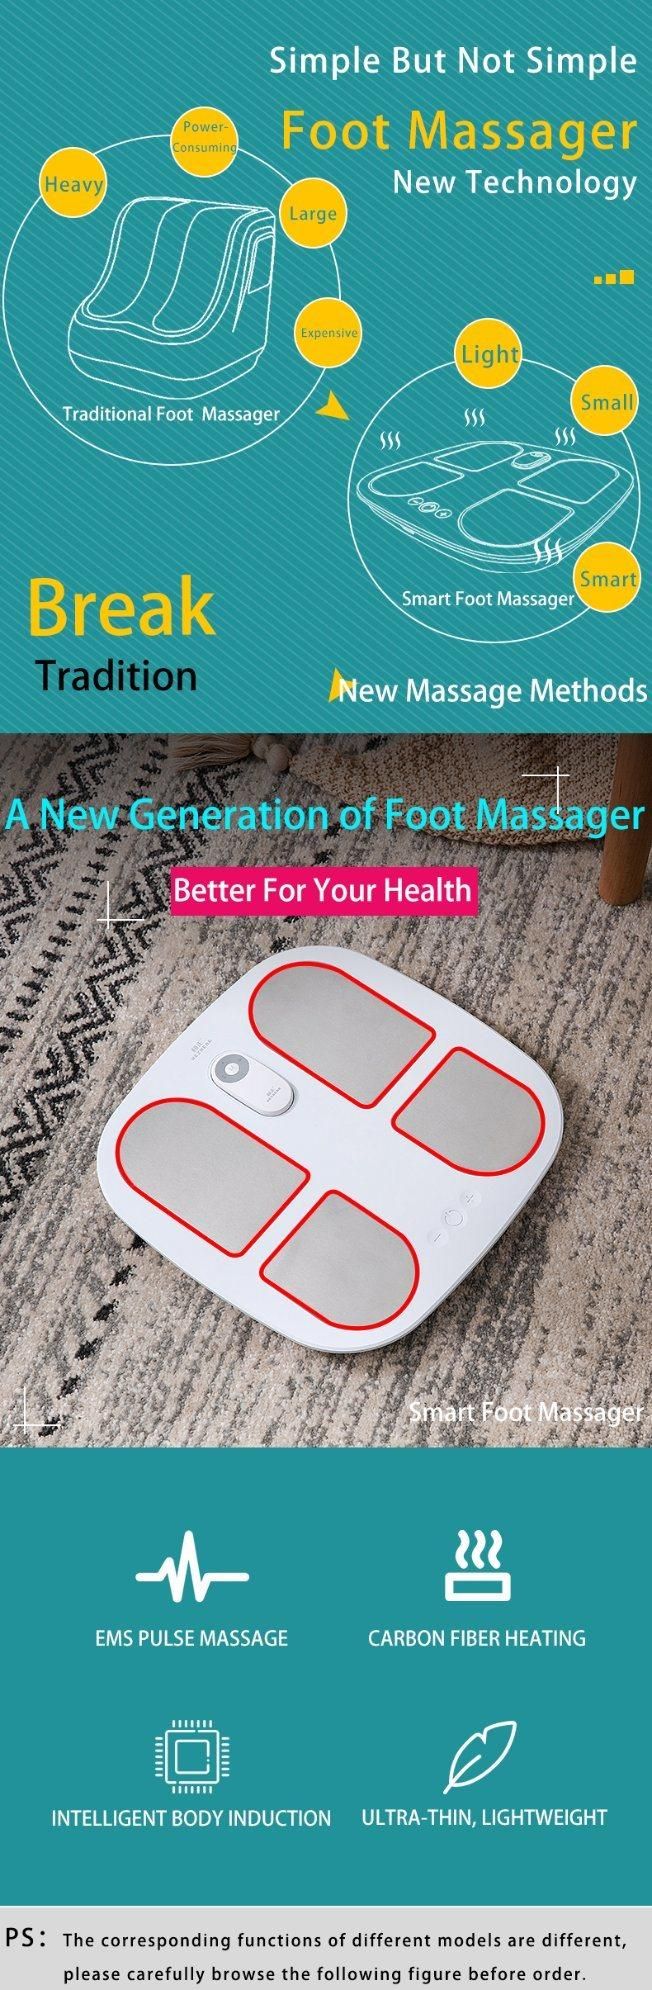 Hezheng New Style Electric Pulse Heating Massager Machine Foot Massager